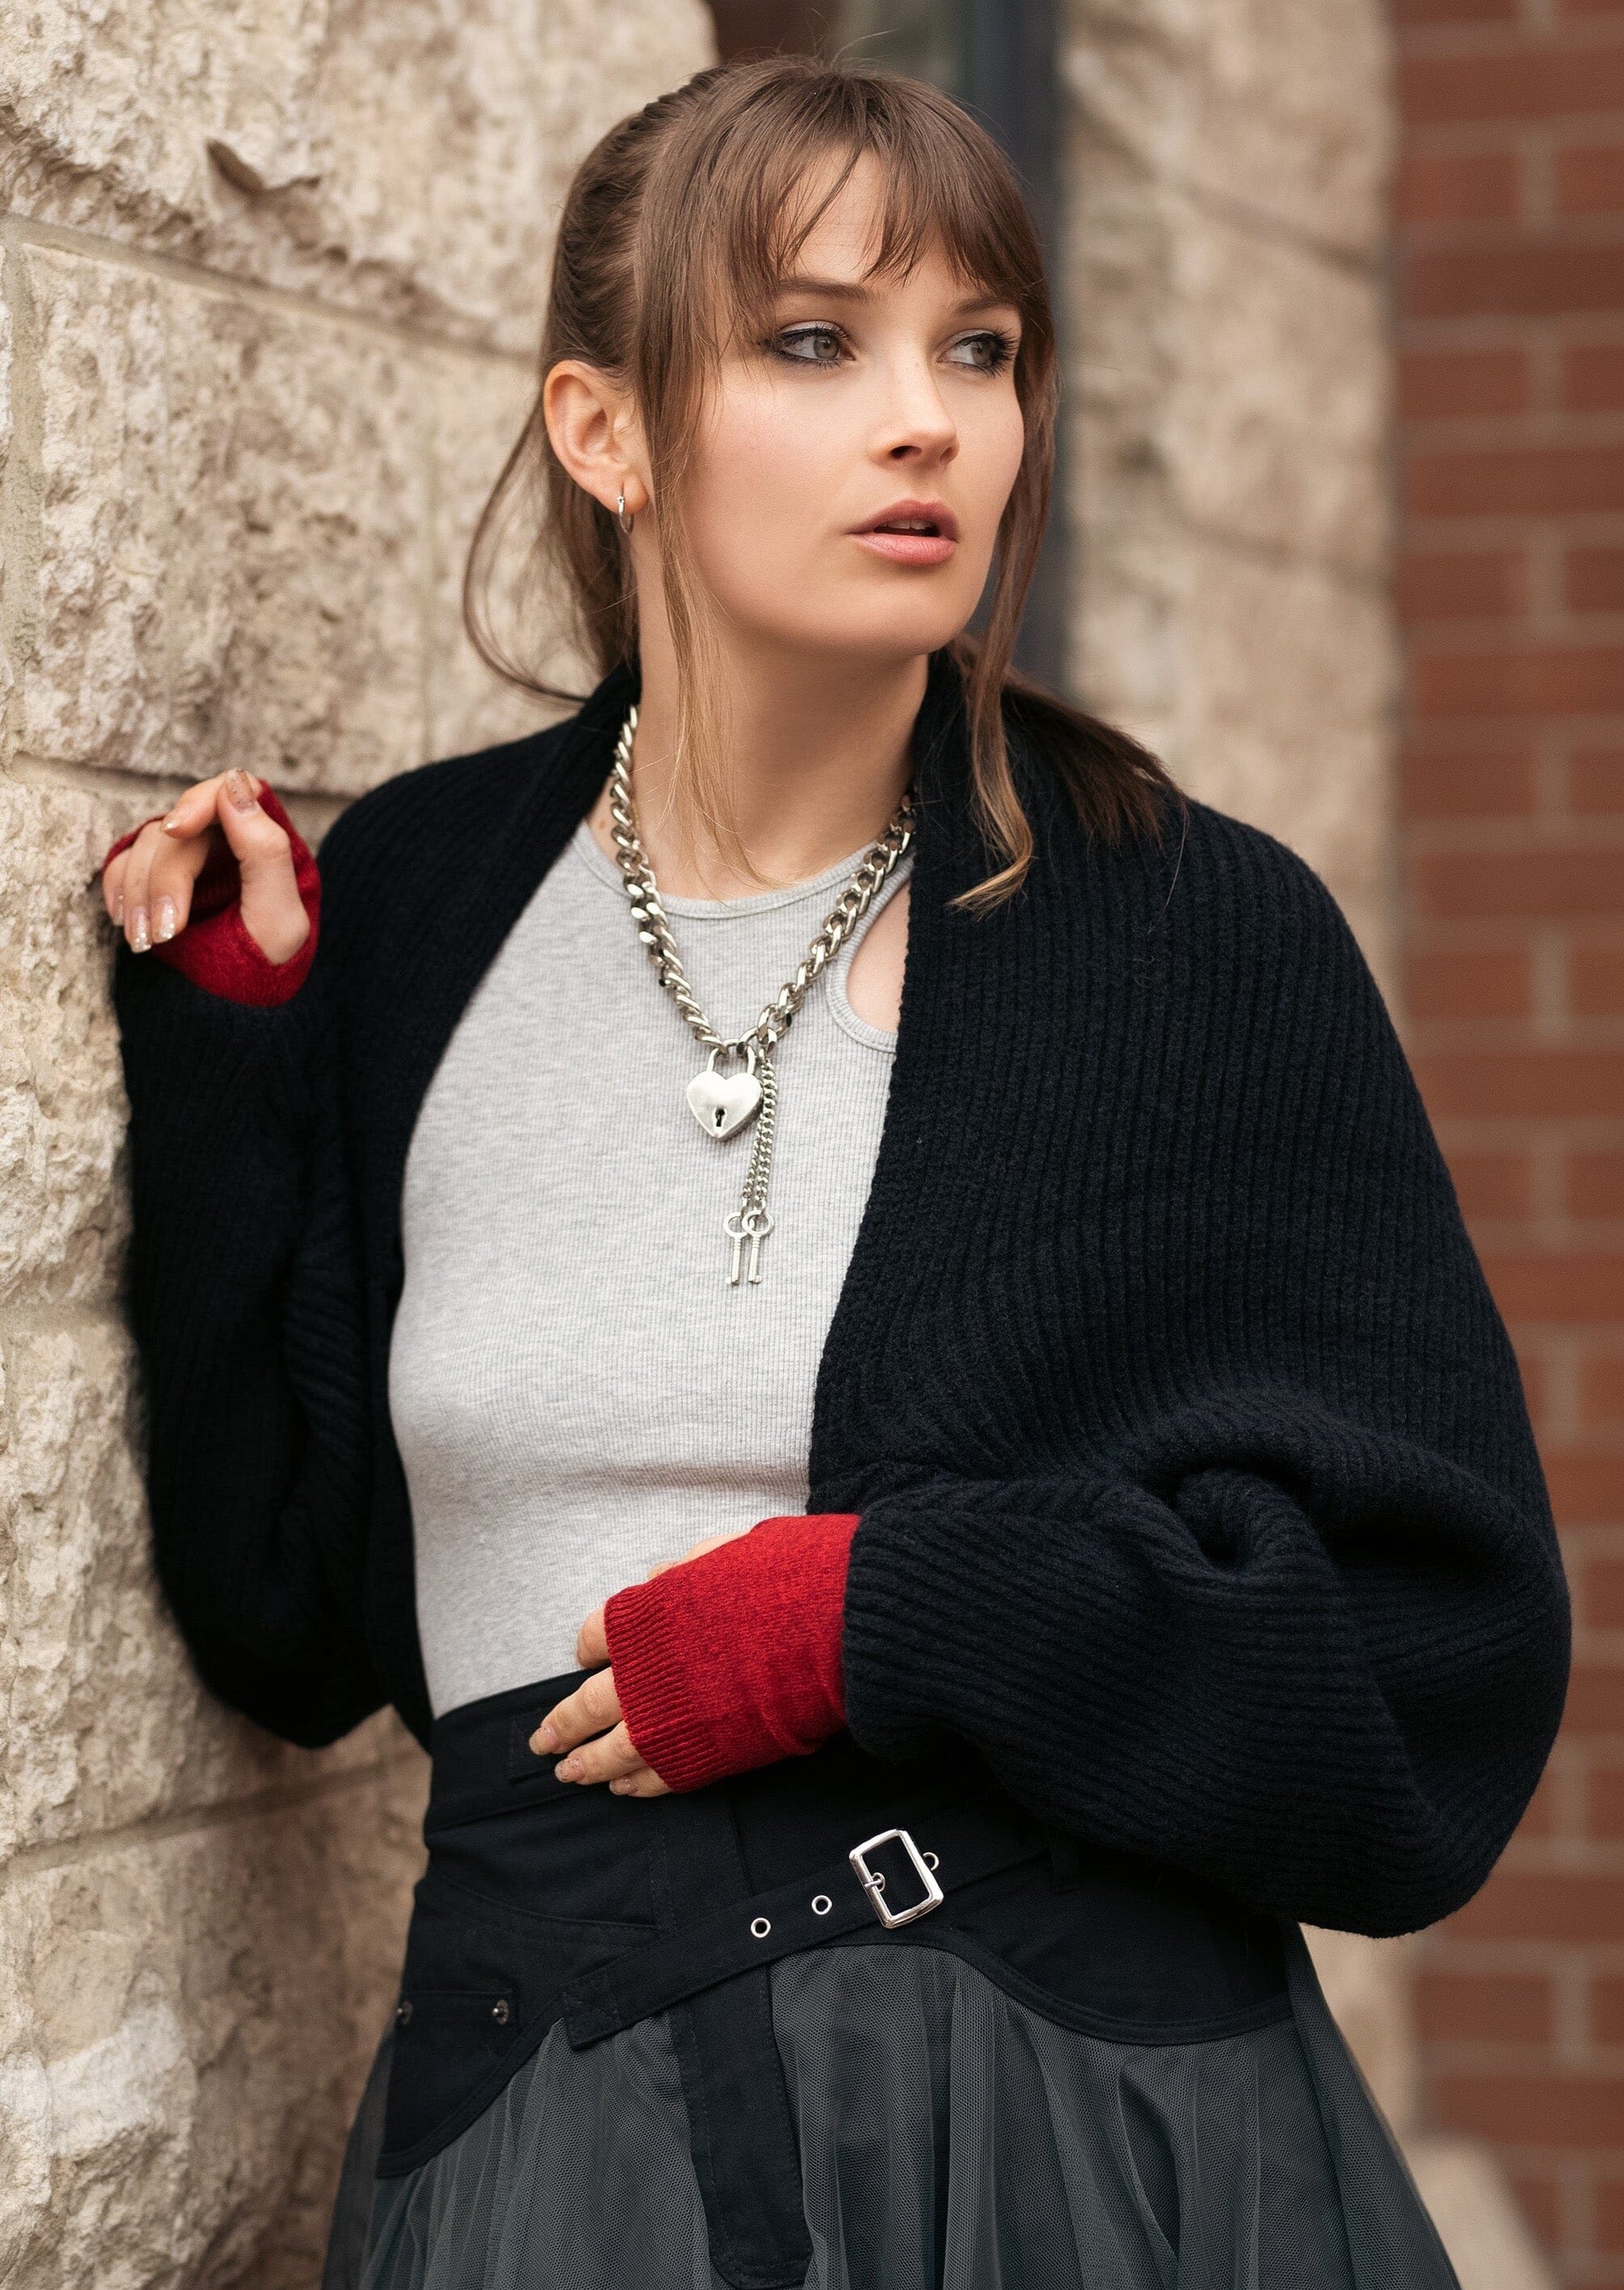 Chunky Knit Shrug Sweaters Kate Hewko One Size Black 